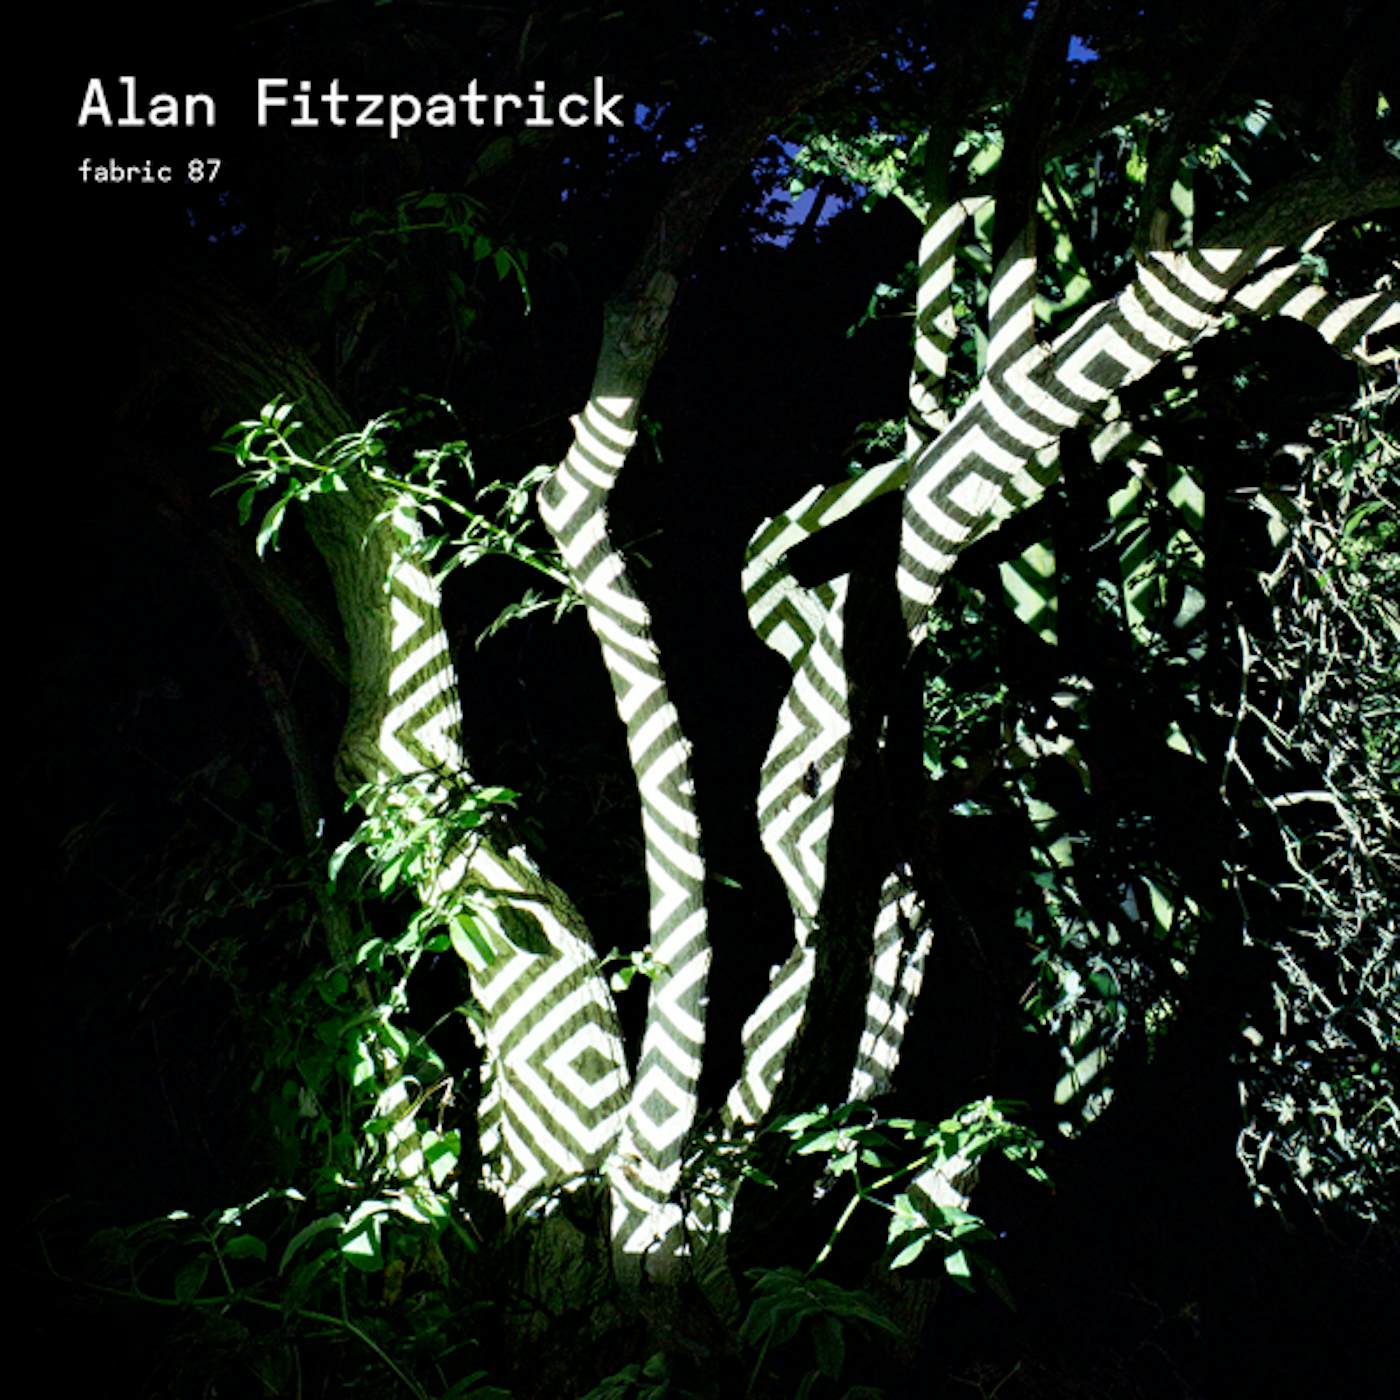 Alan Fitzpatrick FABRIC 87 CD